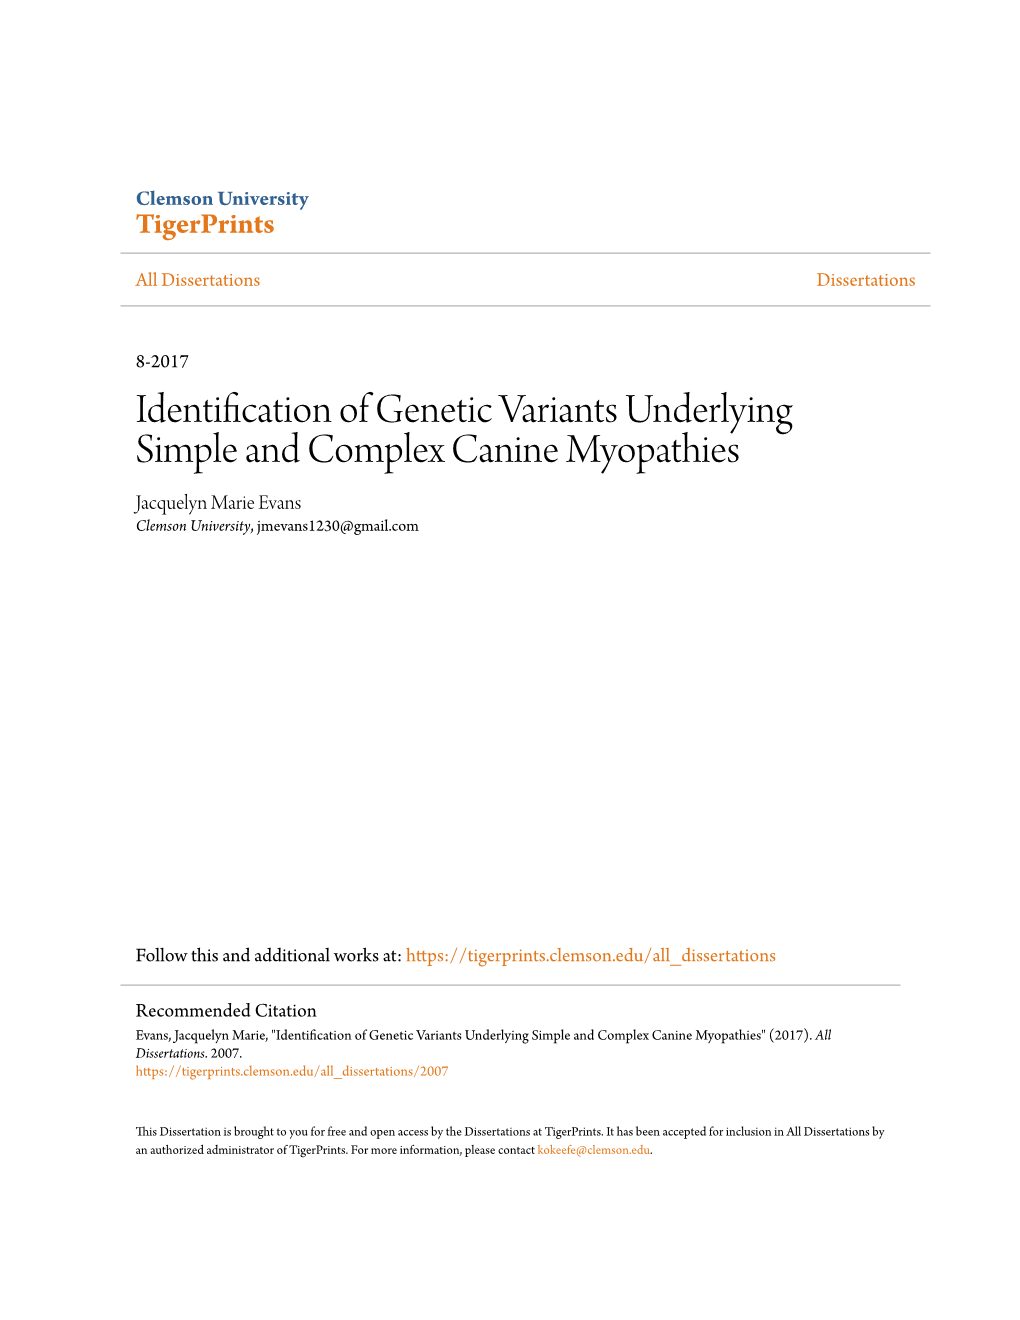 Identification of Genetic Variants Underlying Simple and Complex Canine Myopathies Jacquelyn Marie Evans Clemson University, Jmevans1230@Gmail.Com